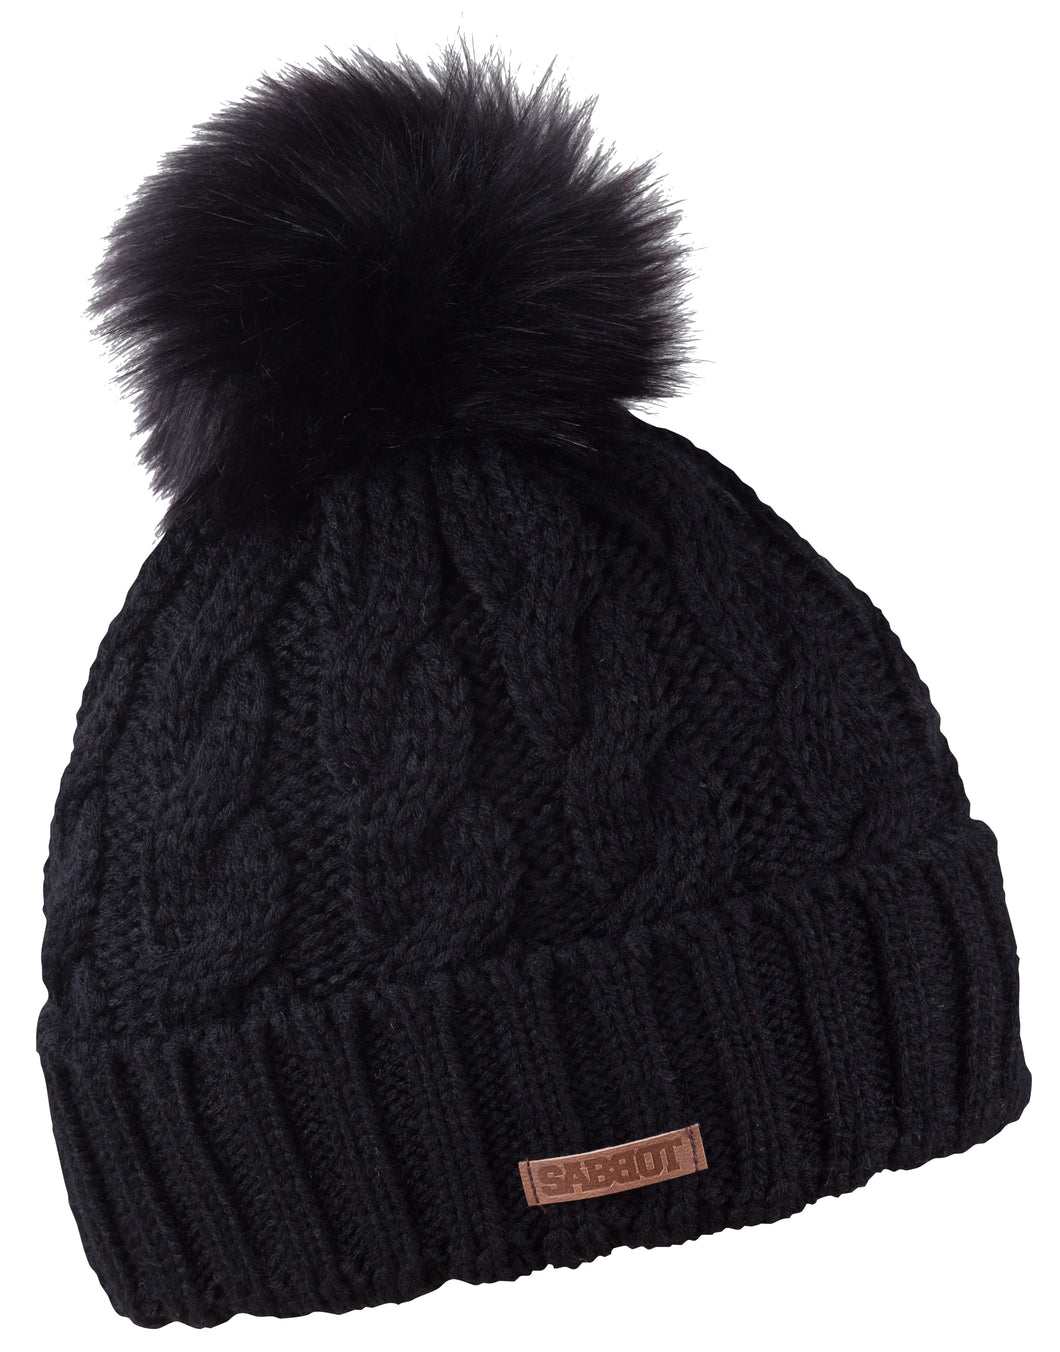 Sabbot Ladies Winter Fleece Lined Beanie Hat. Linda. Black.